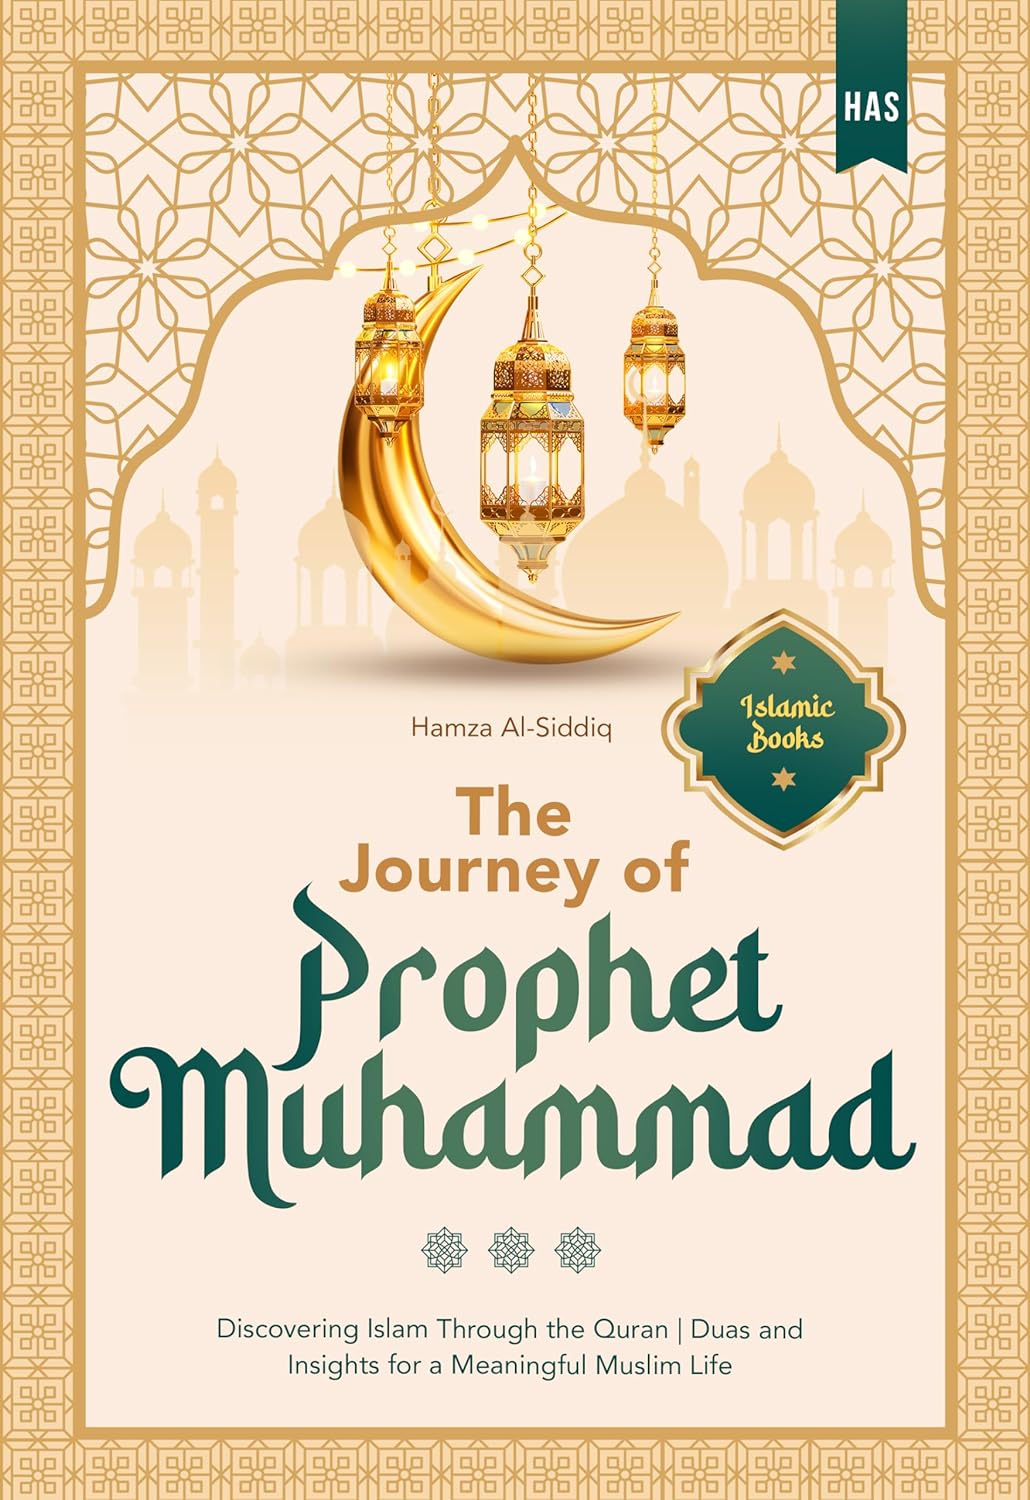 The Journey of Prophet Muhammad by Hamza Al-Siddiq